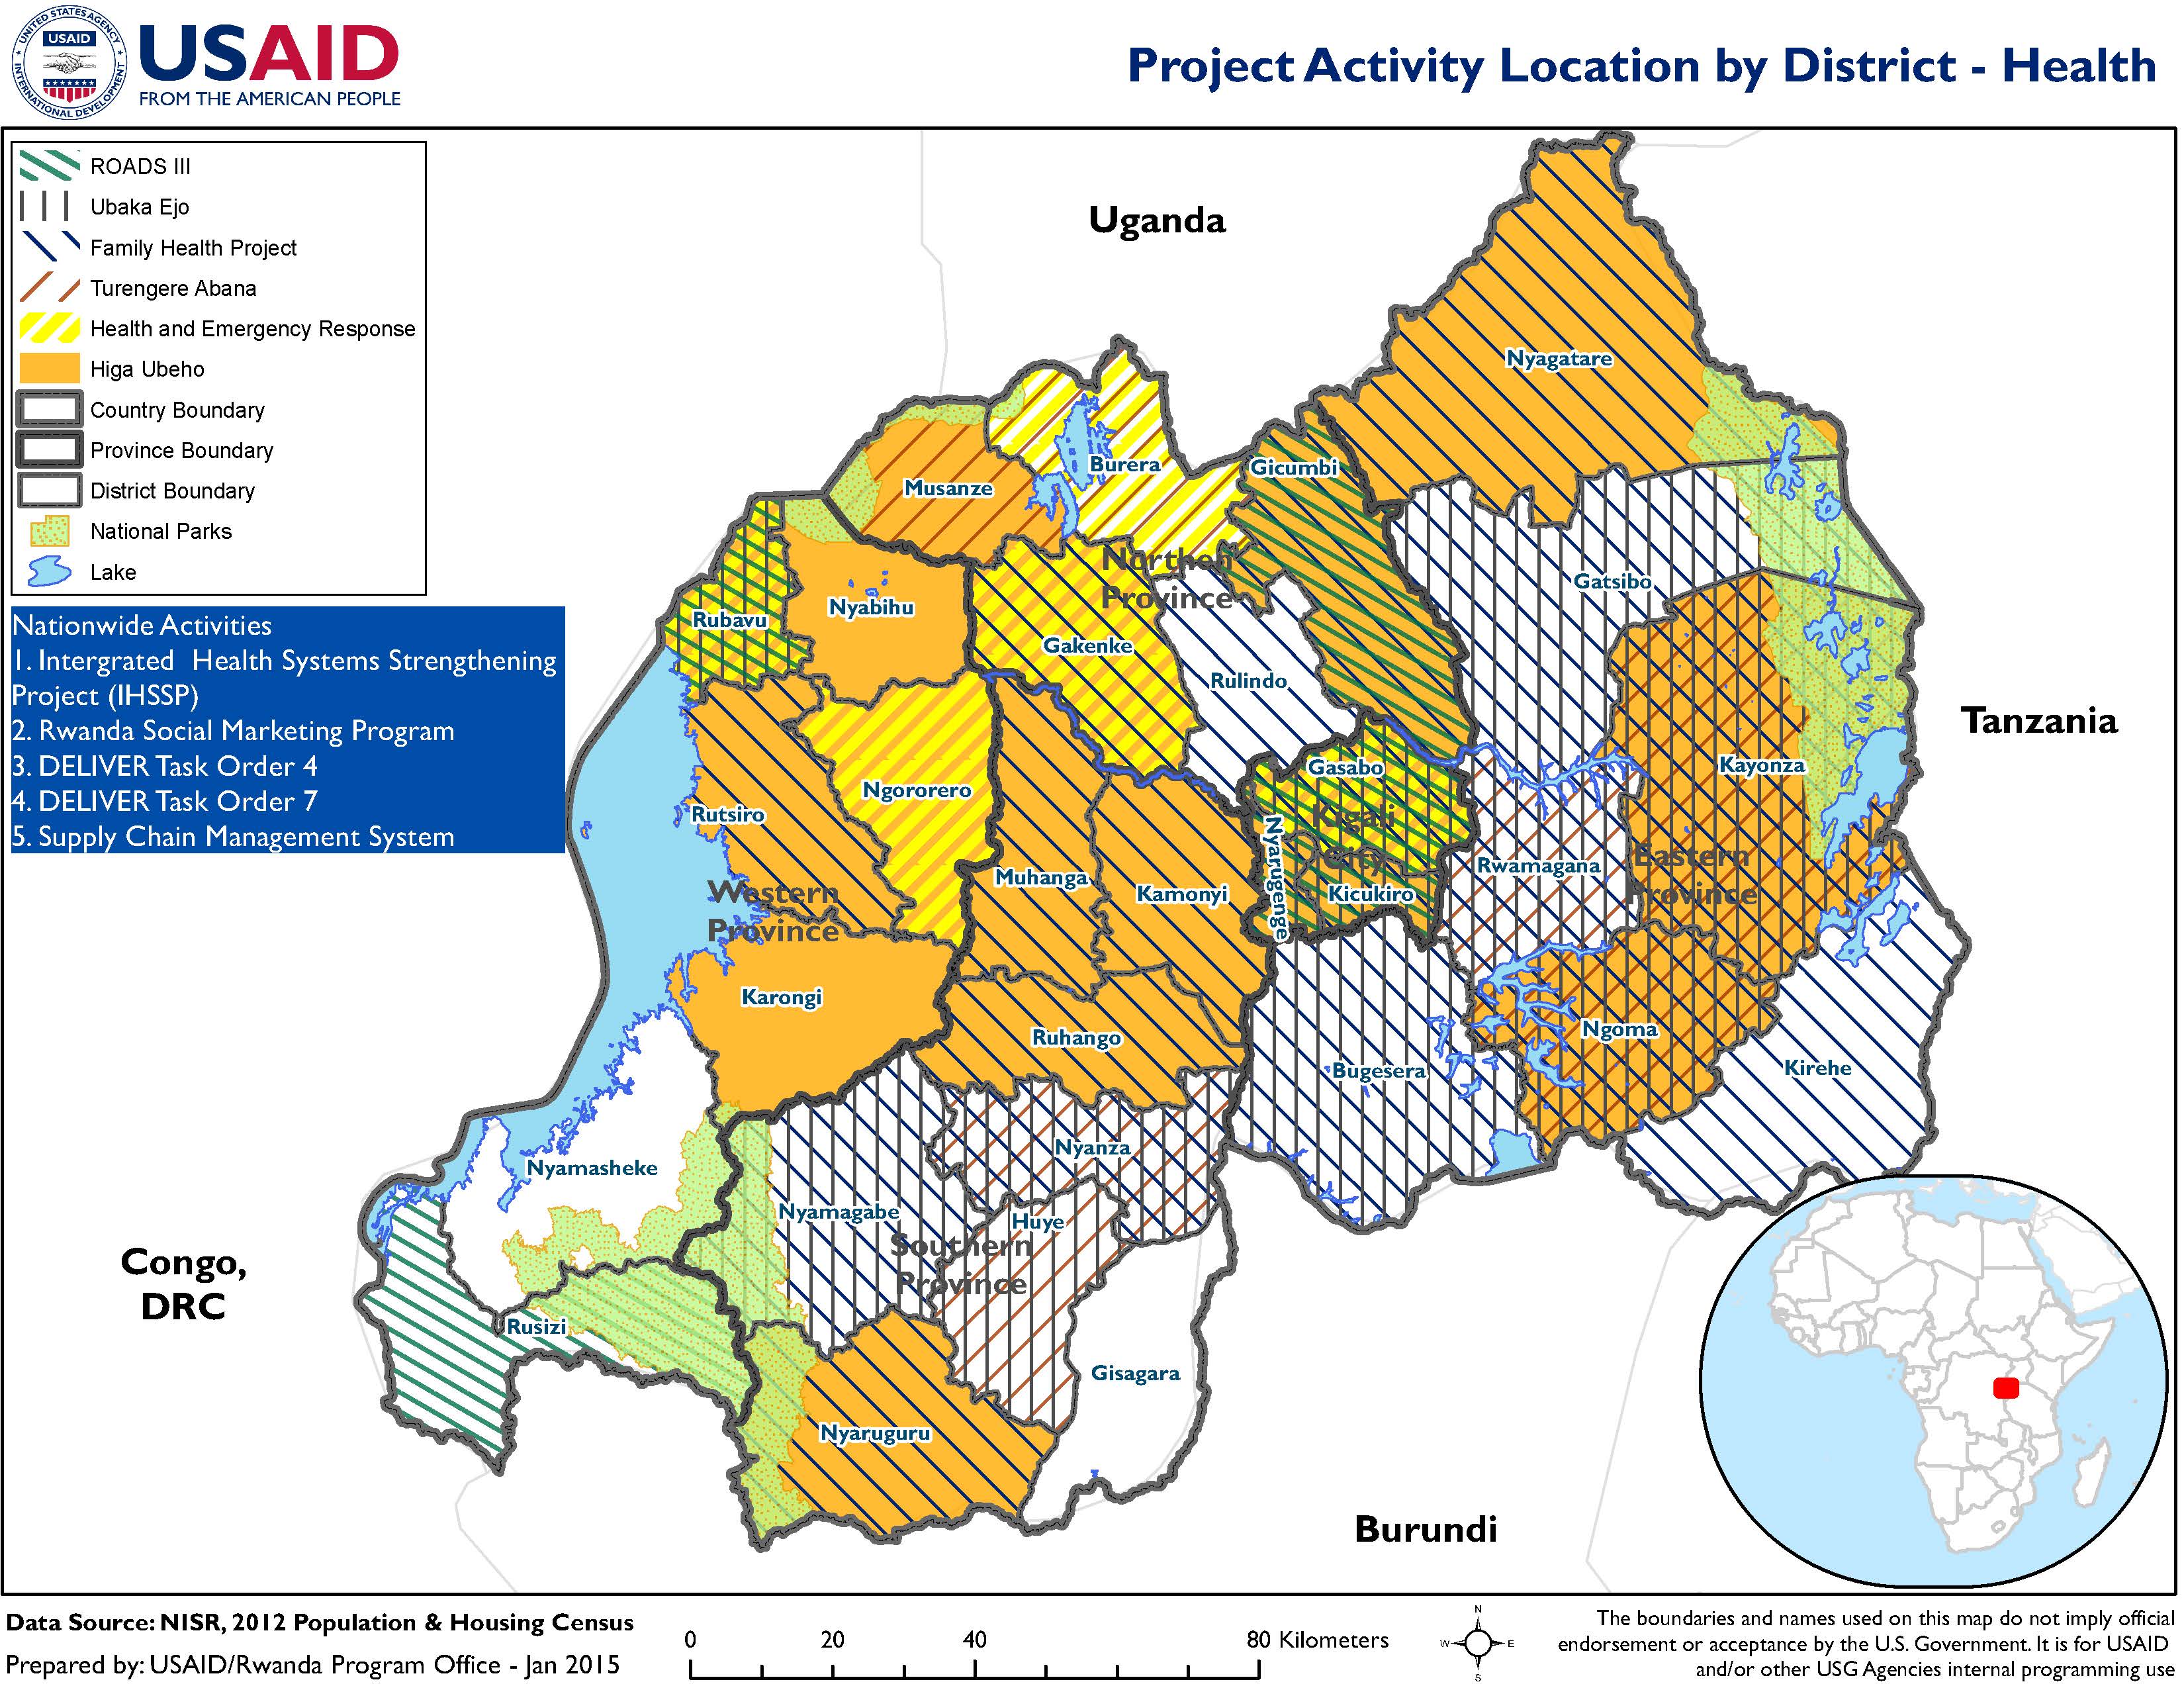 USAID/Rwanda's Health Program Locations by District